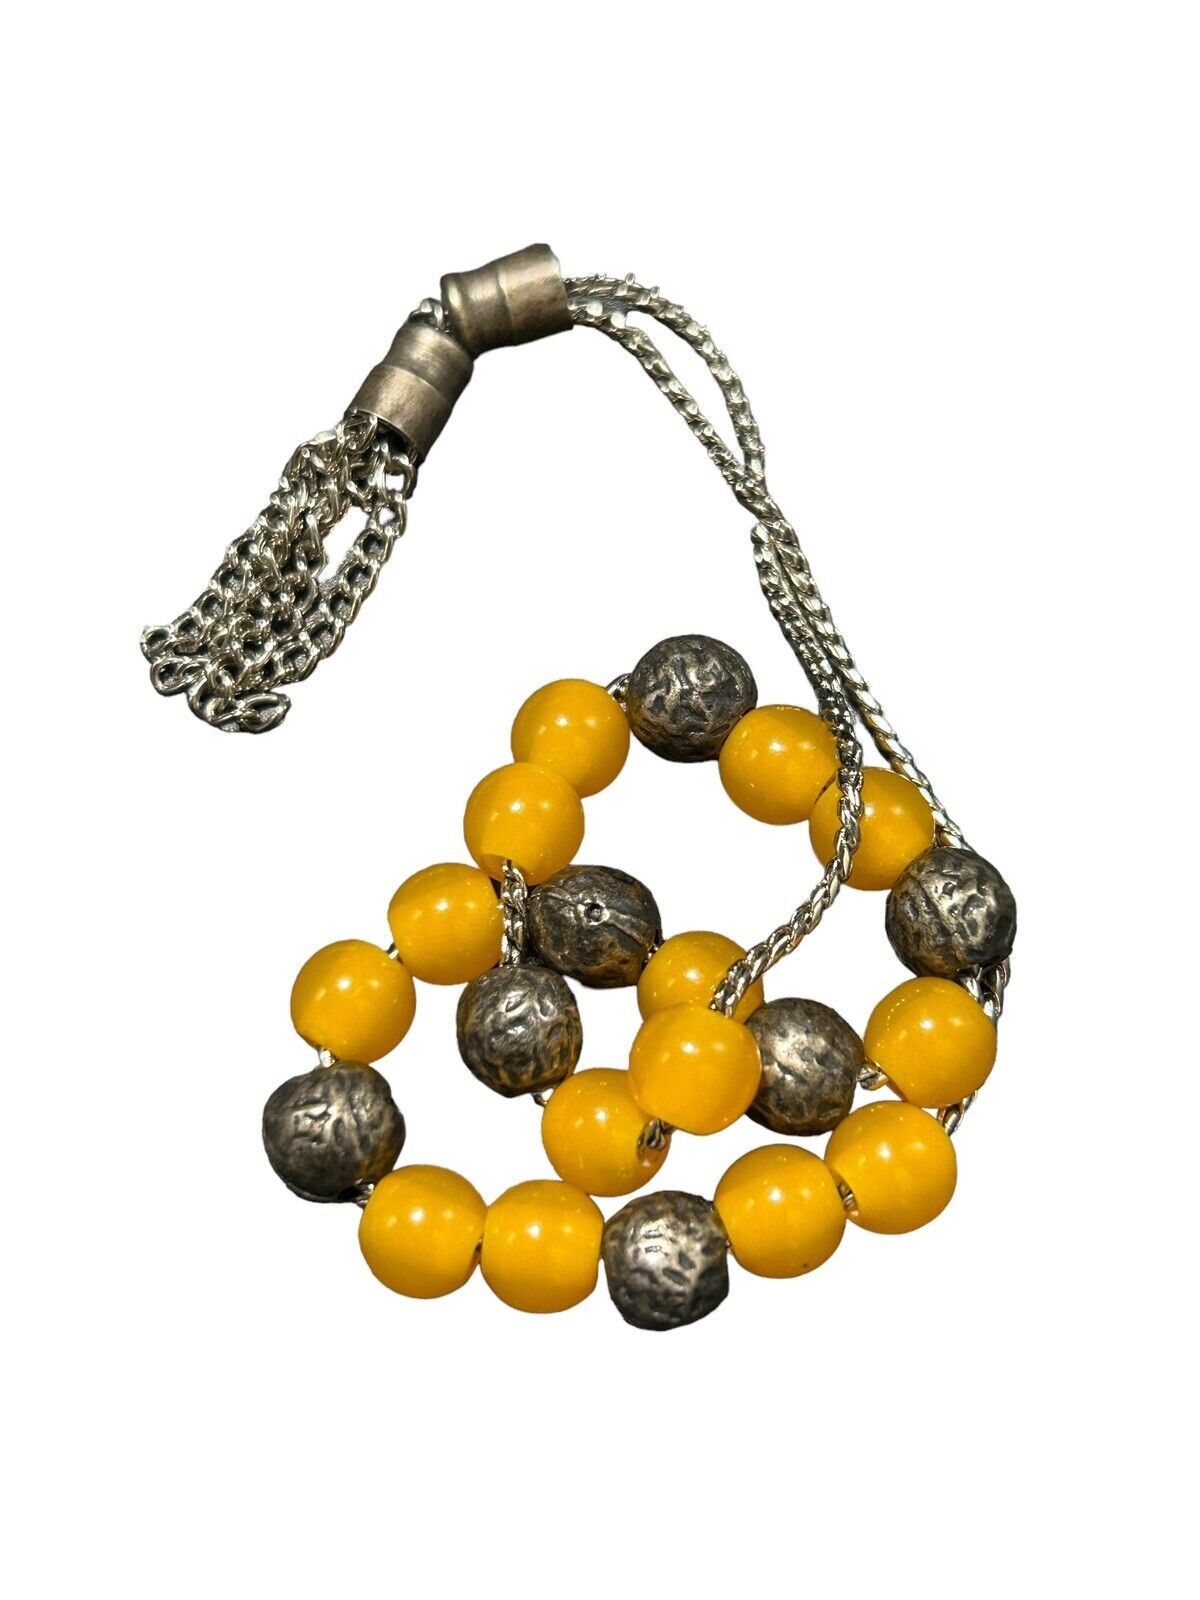 Vintage Agate Prayer Beads Islamic Rosary Yellow Silver Gemstone Toggle